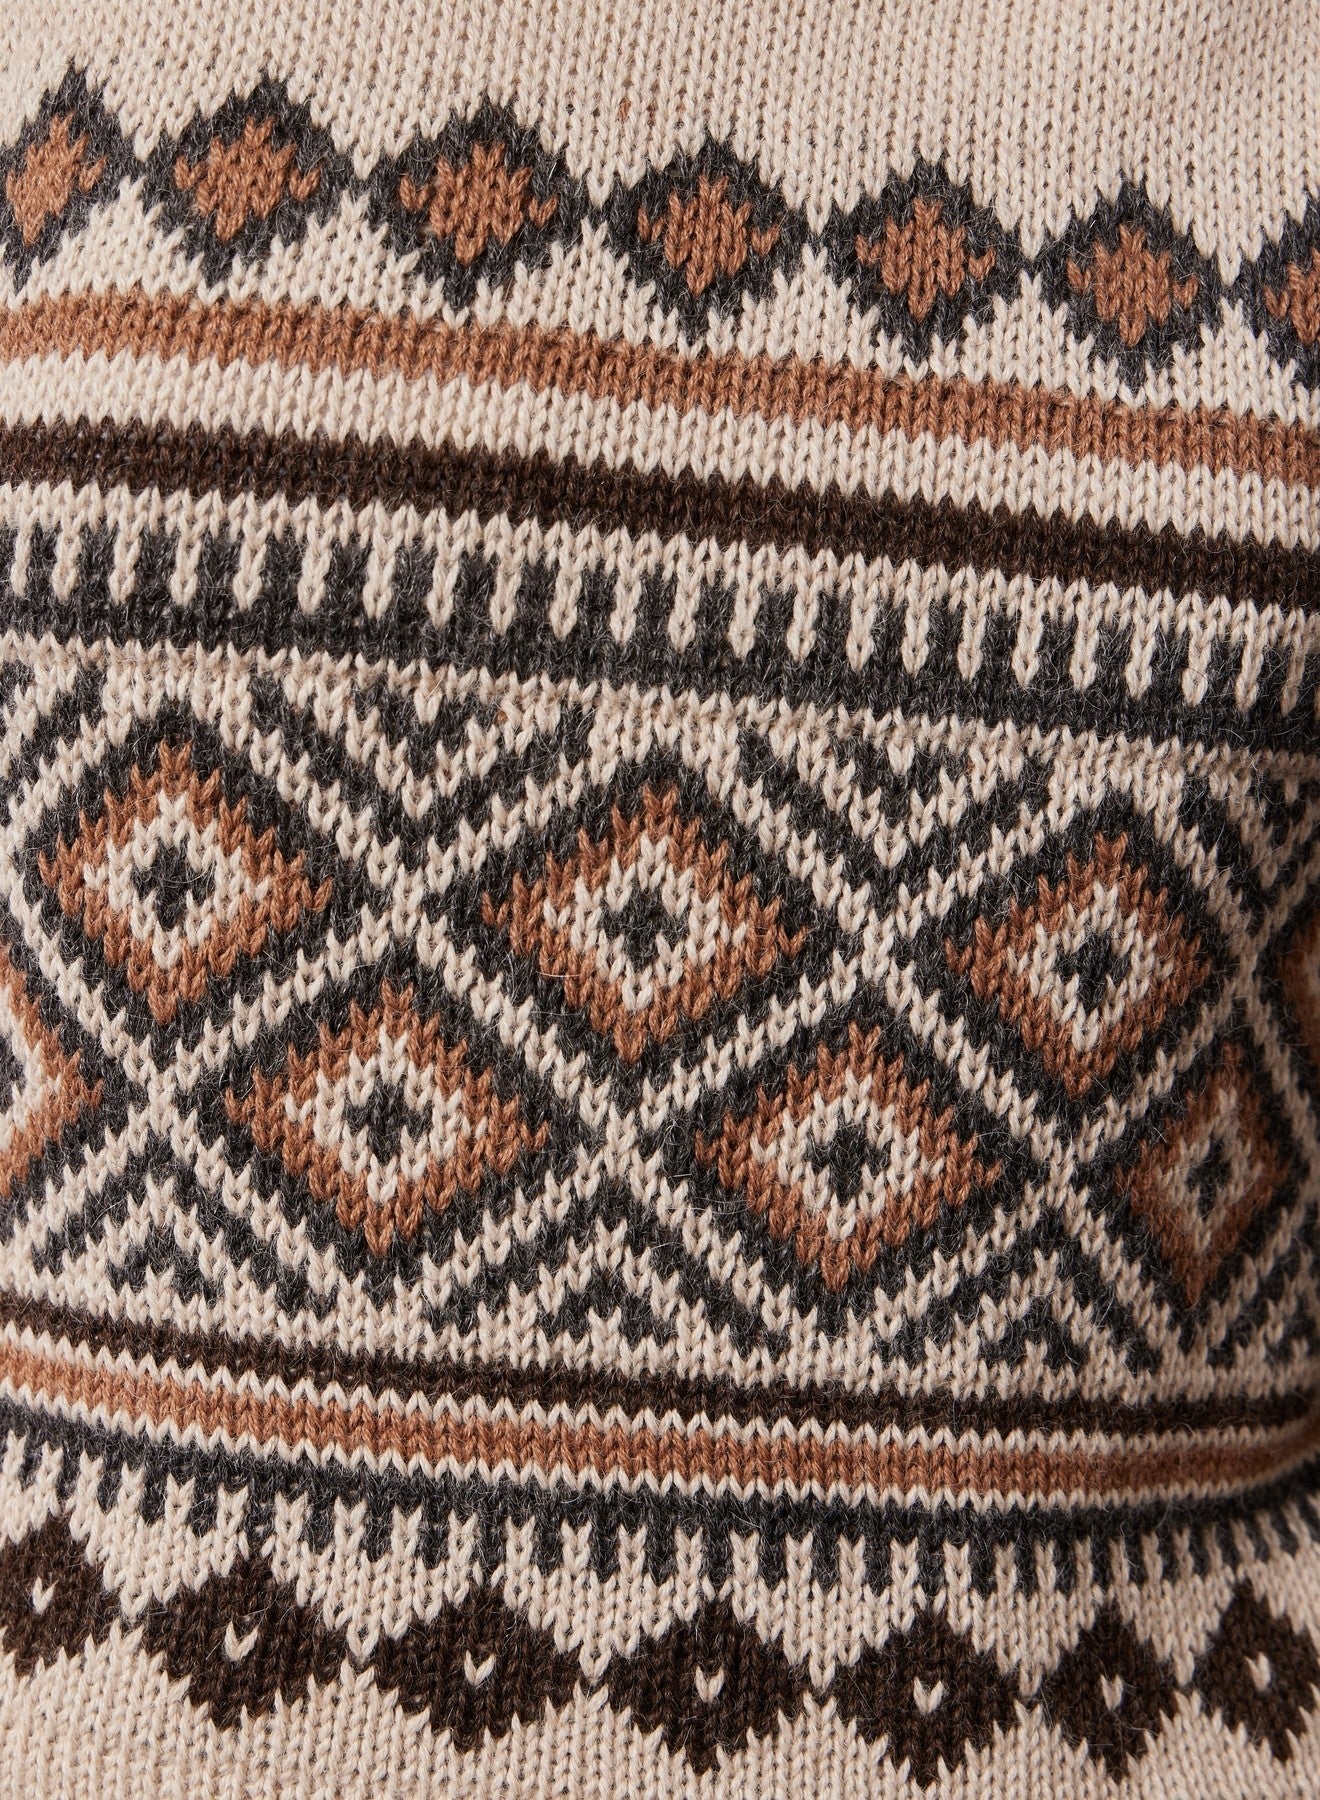 Pakao sweater